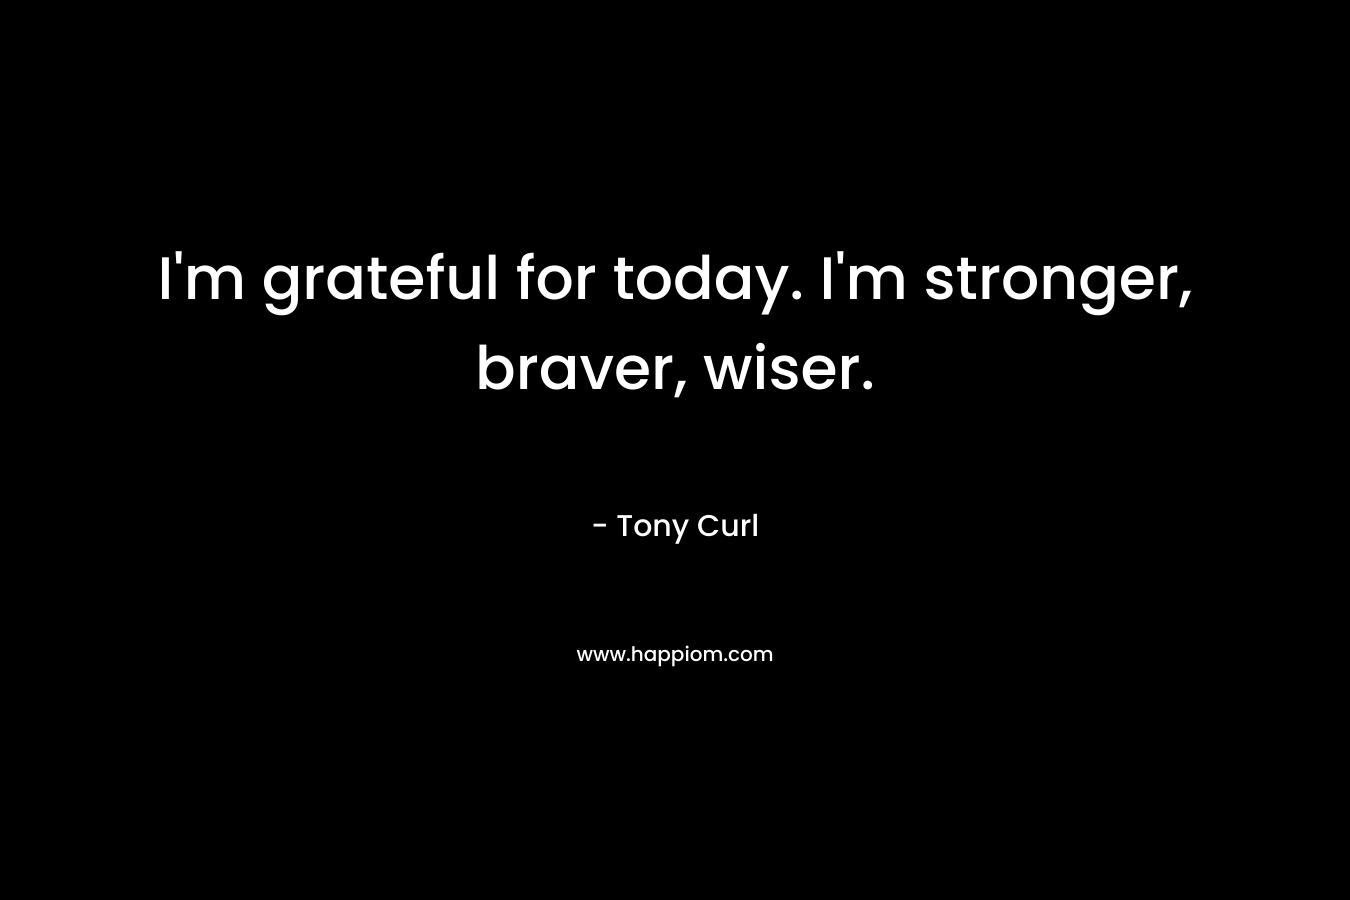 I'm grateful for today. I'm stronger, braver, wiser.